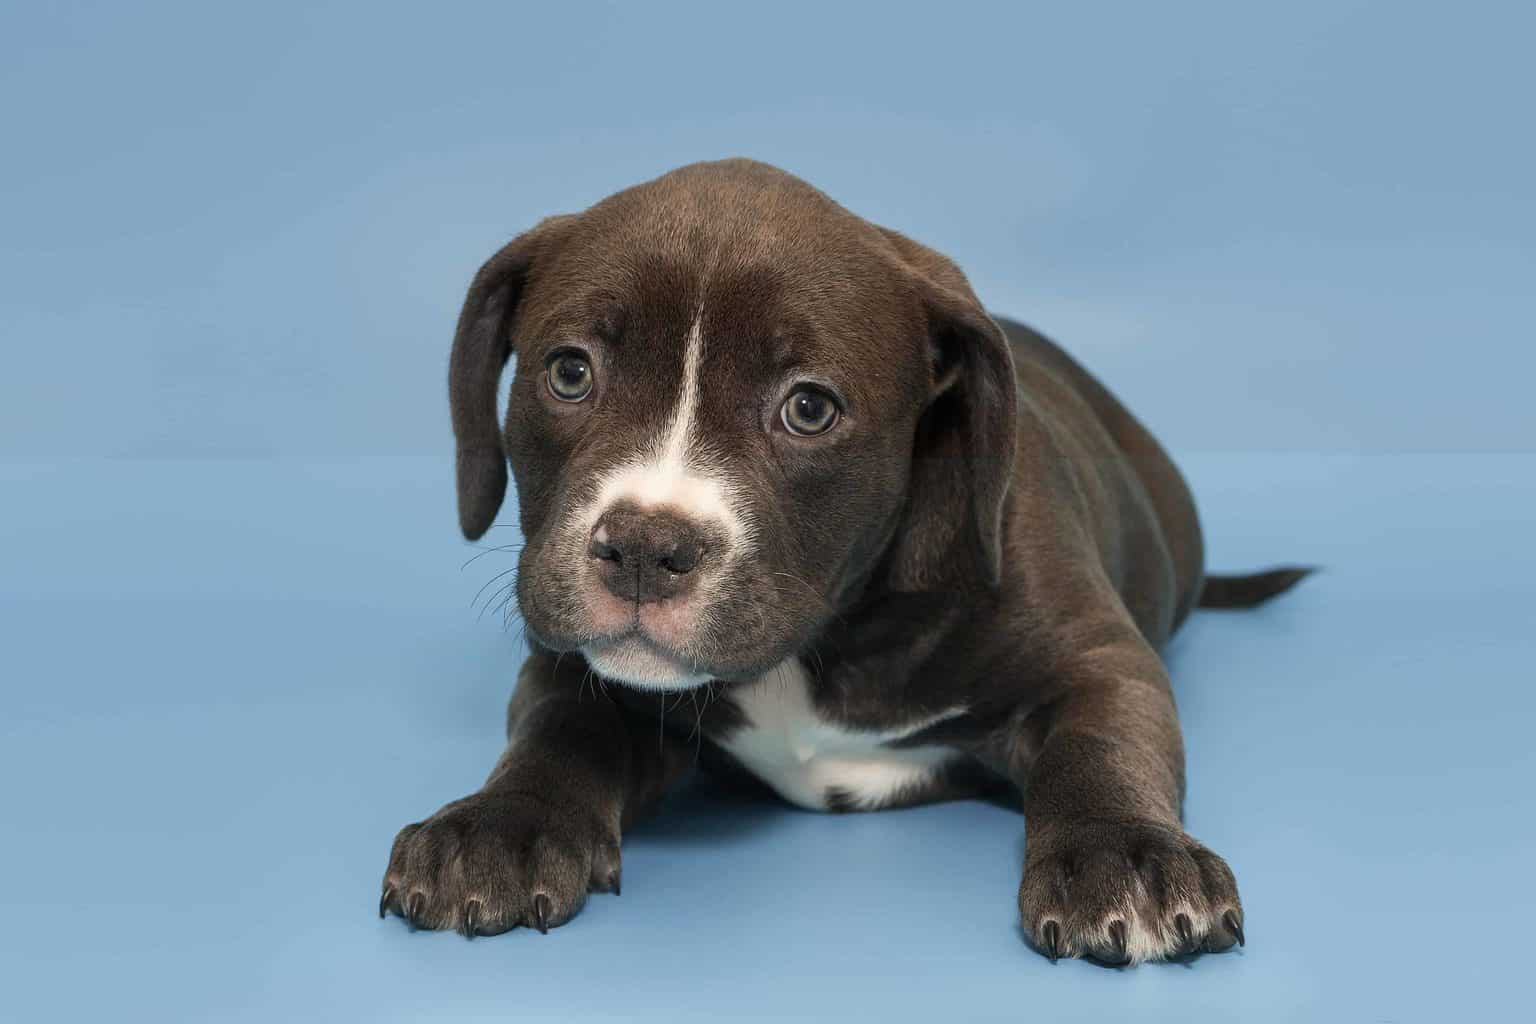 American Bulldog puppy on blue background.